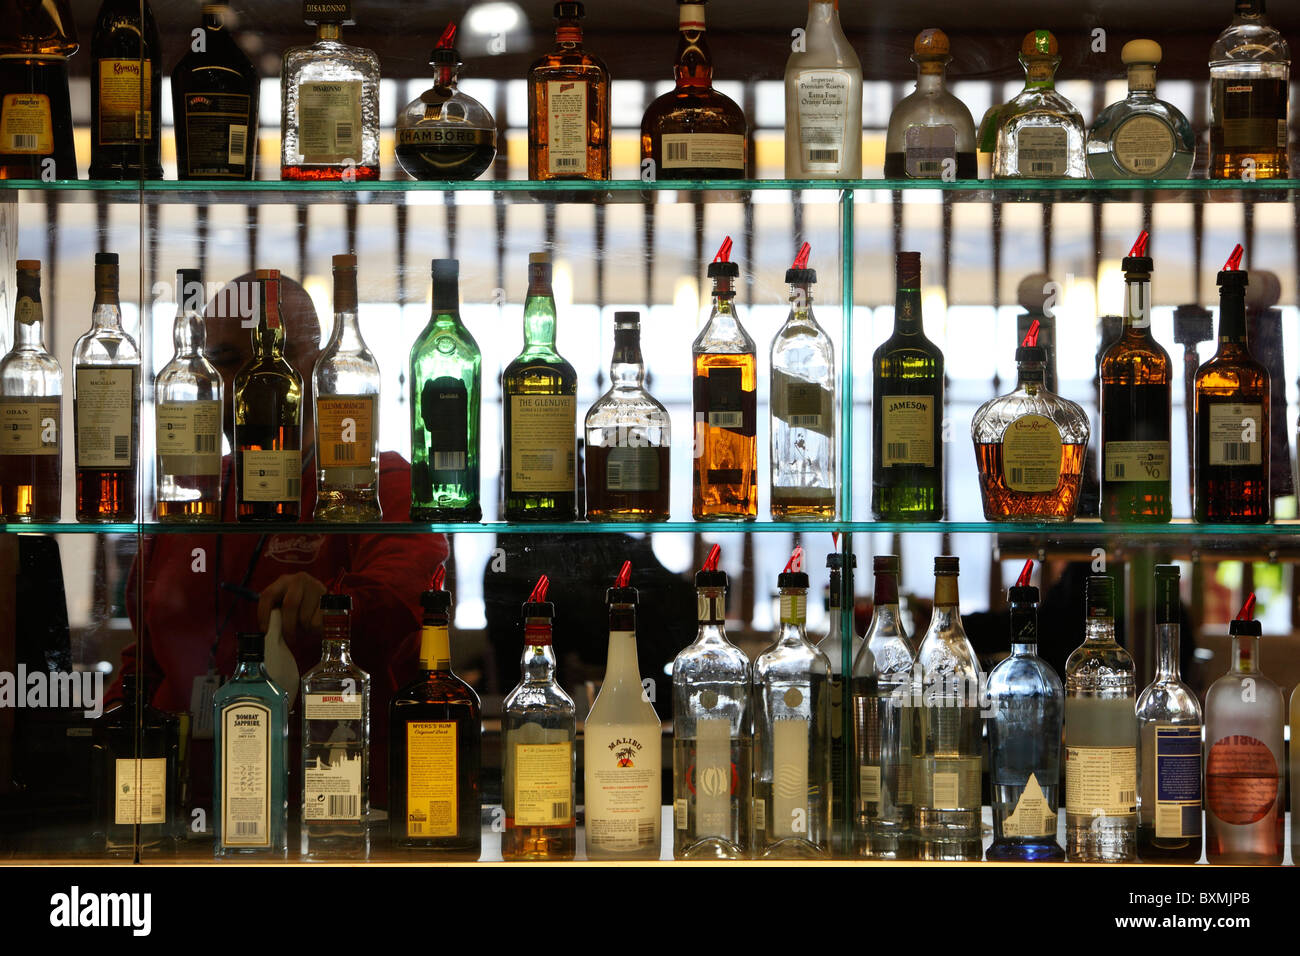 Liquor bottles on shelves at a bar Stock Photo Alamy